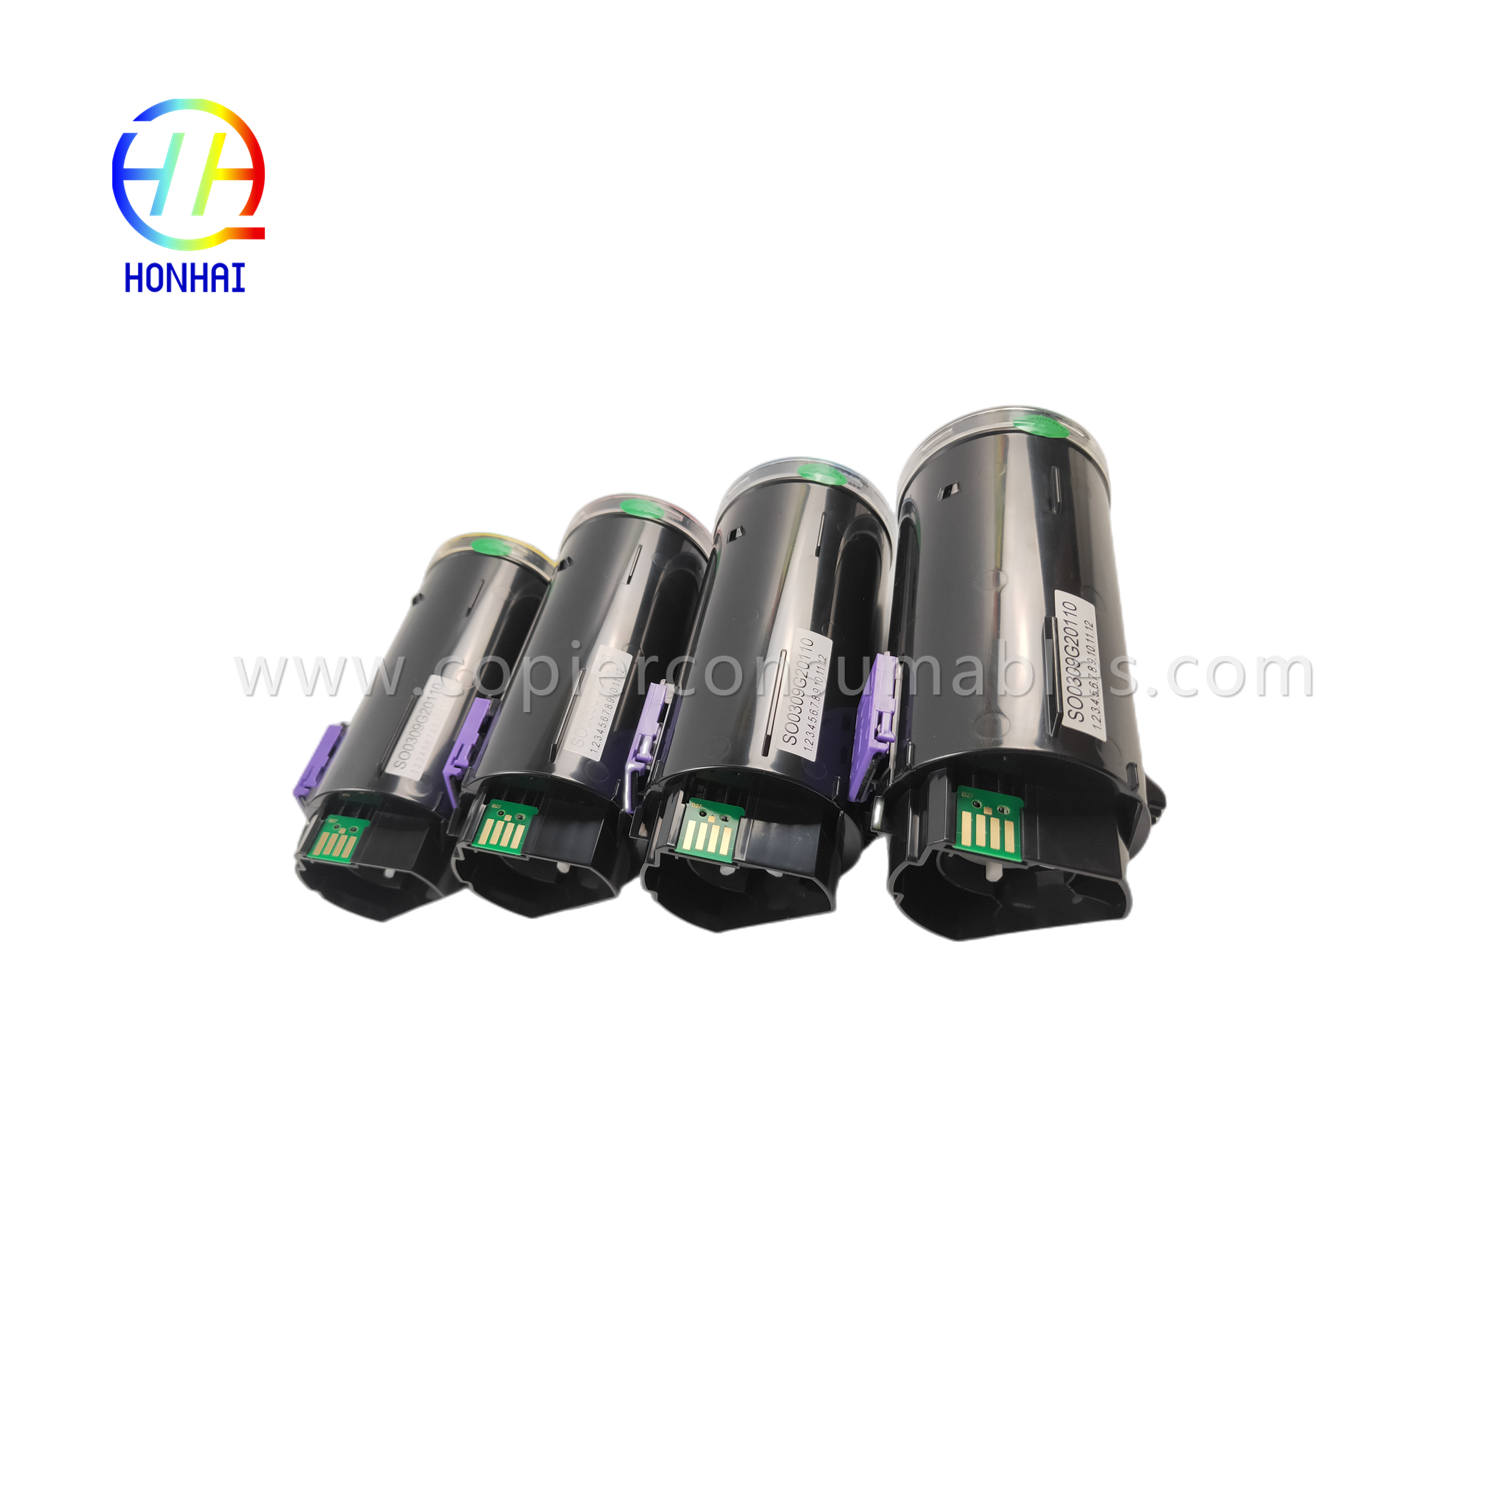 https://www.copierconsumables.com/toner-cartridge-set-imported-powder-for-ricoh-imc530-imc530f-imc530fb-ref-418240-ref-418241-ref-418242-ref-418243-product/